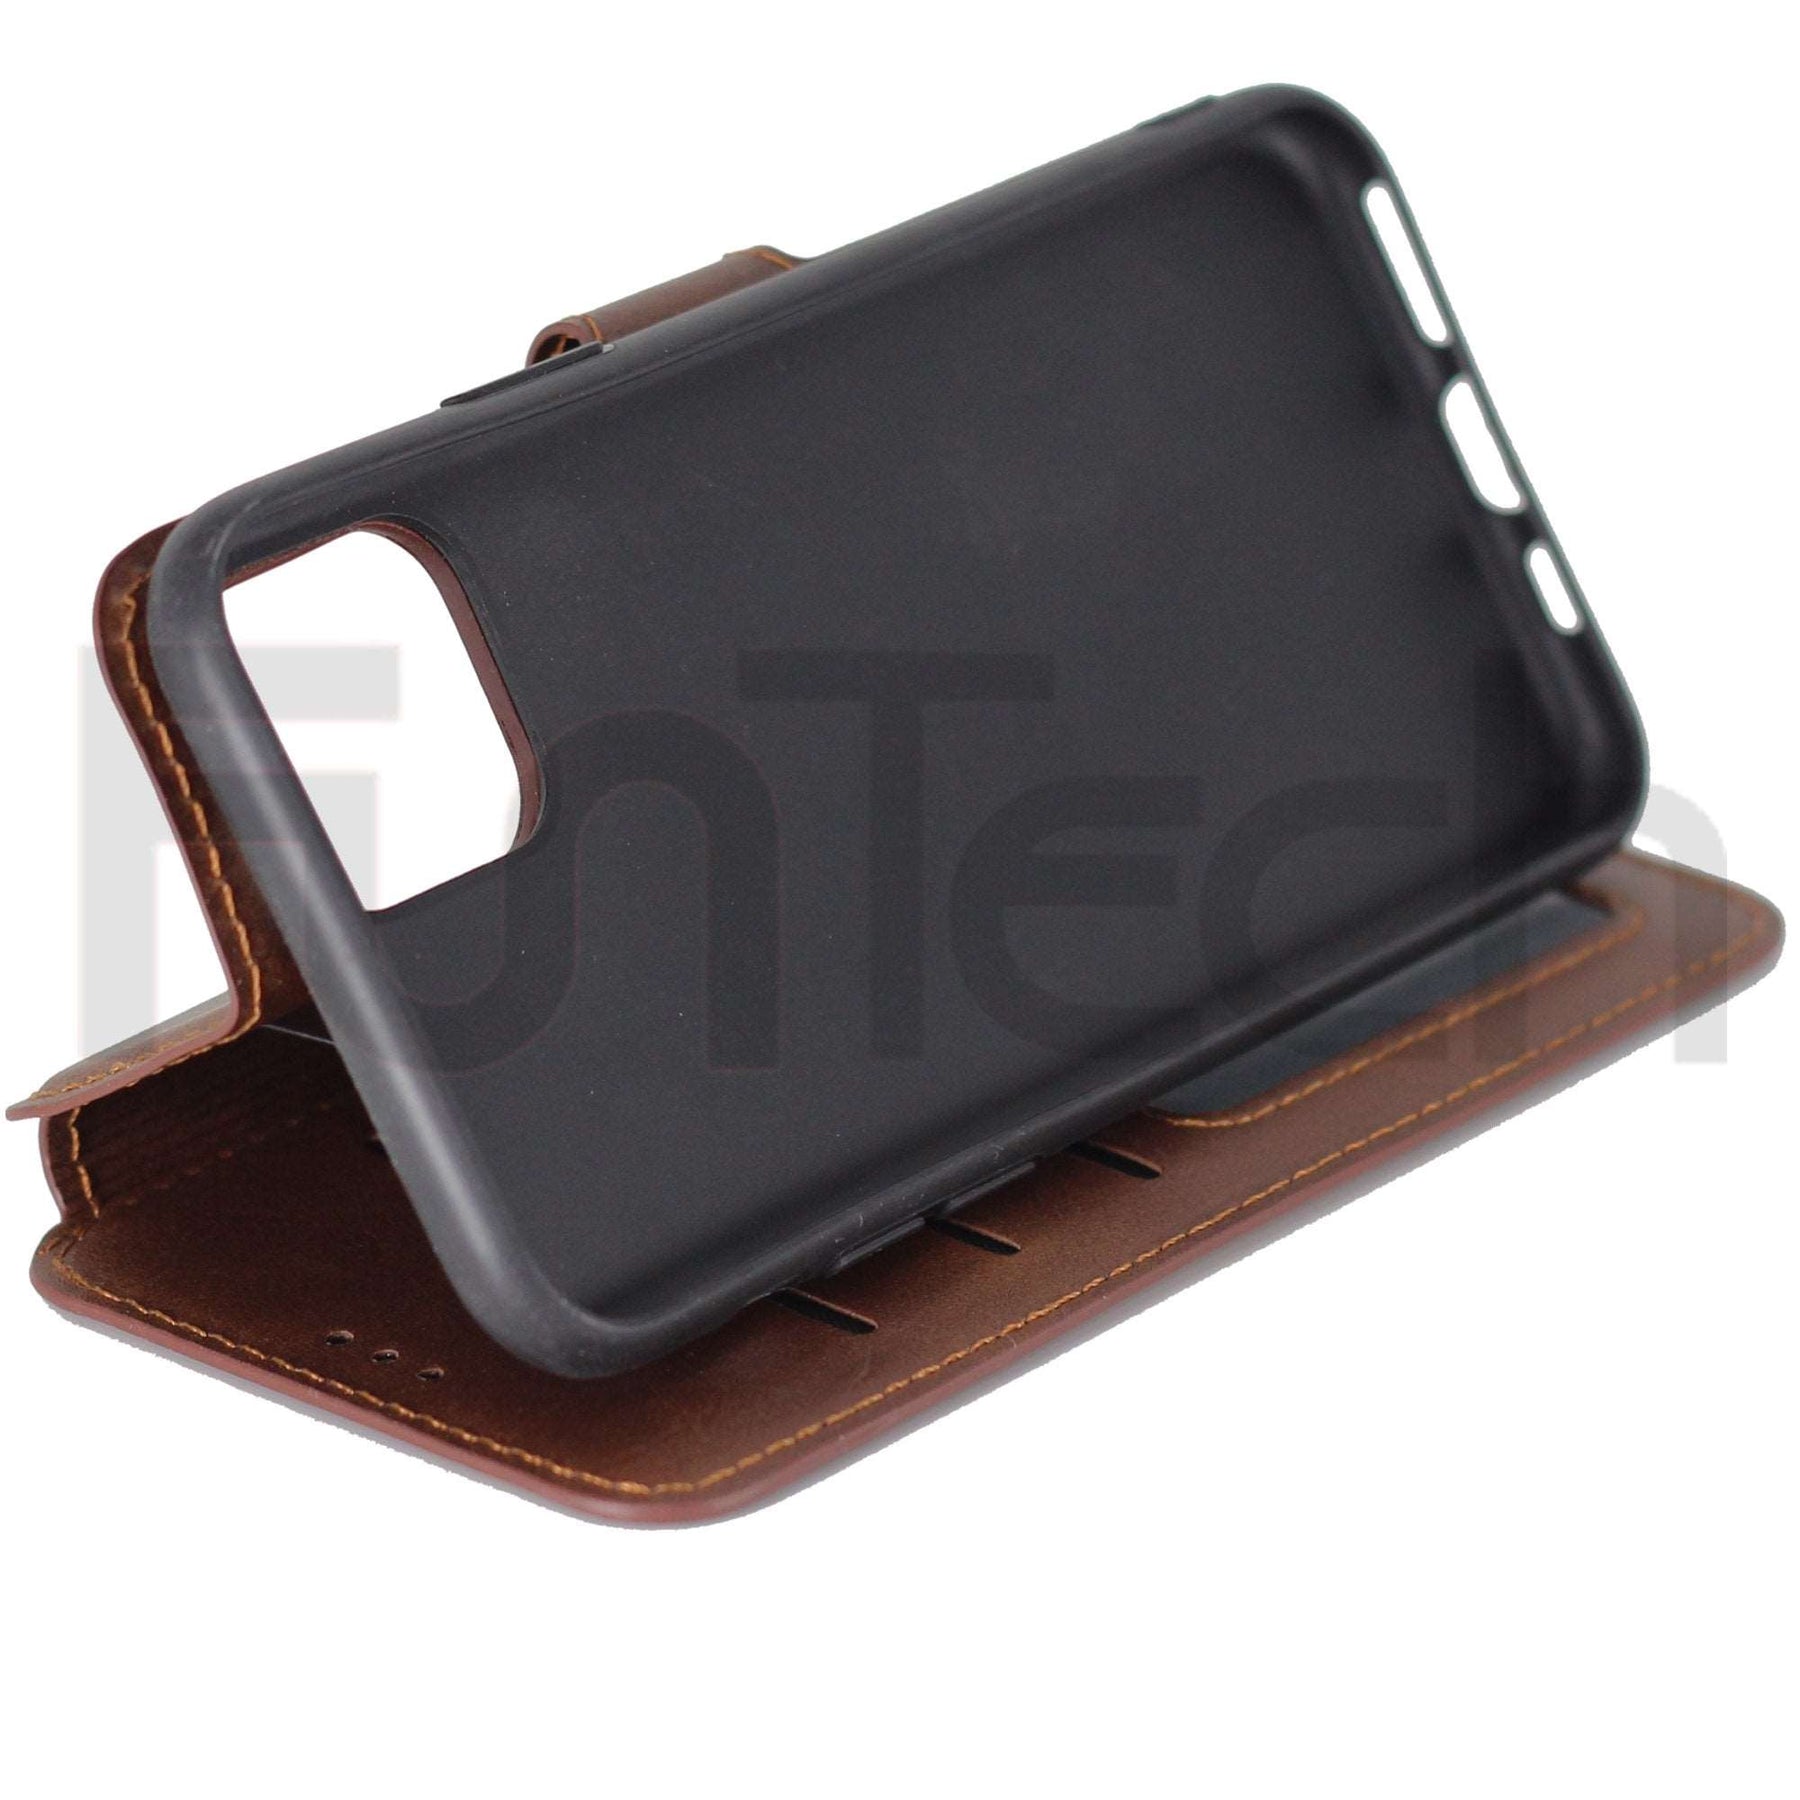 Apple iPhone 11 Pro Premium Quality Leather Case Brown